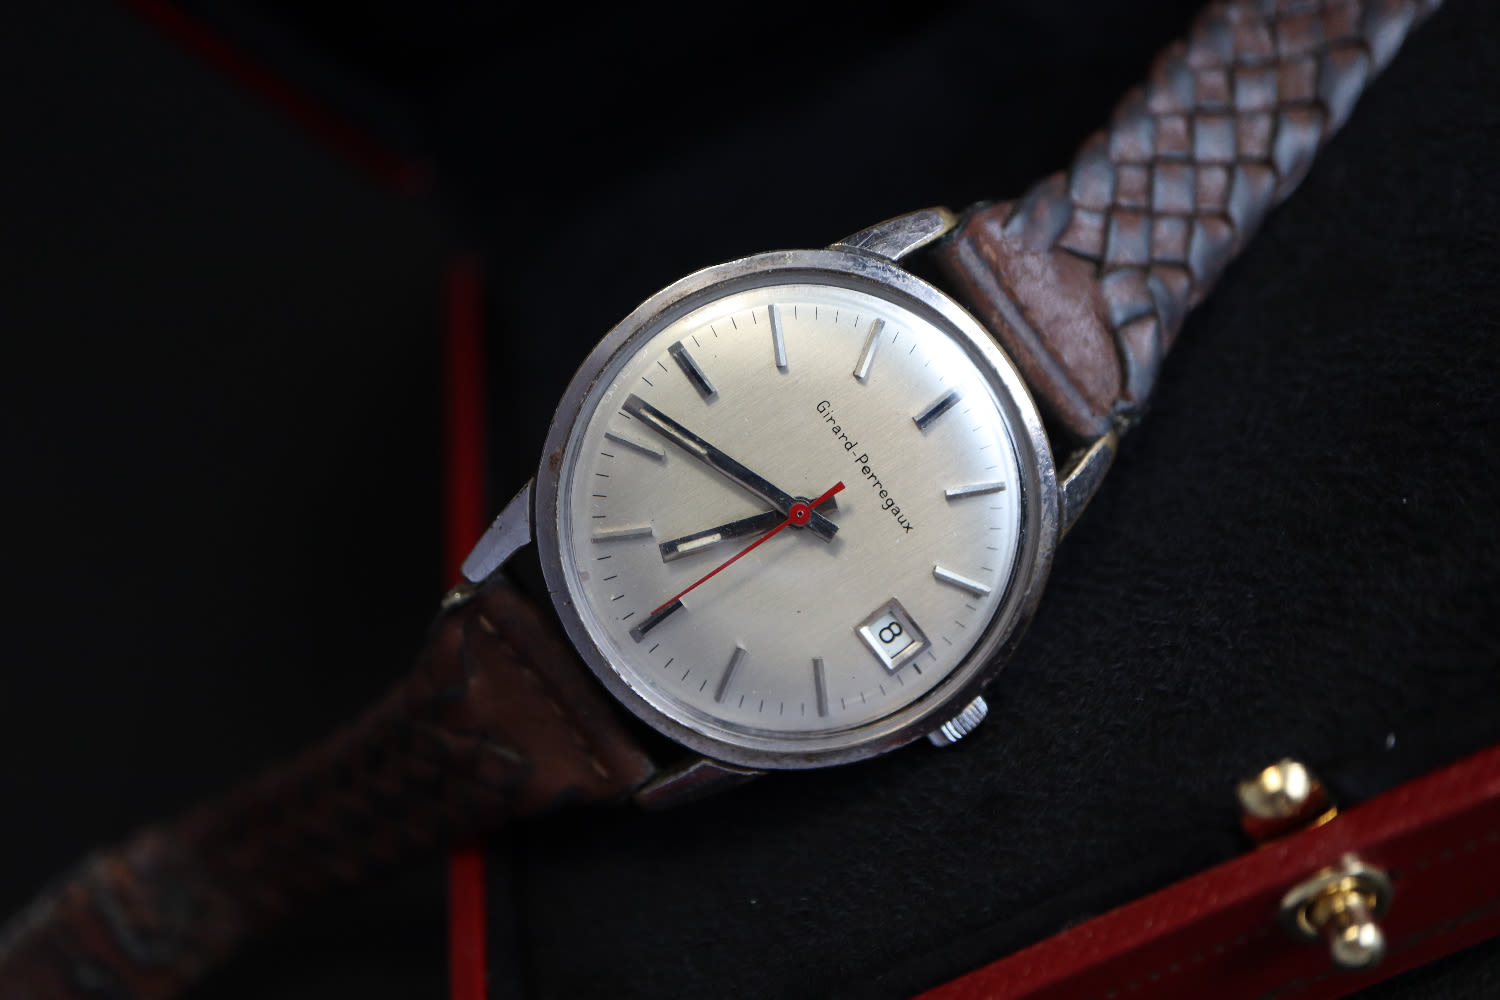 Girard-Perregaux Gents 'Date' Watch 36mm Diameter - Image 2 of 3